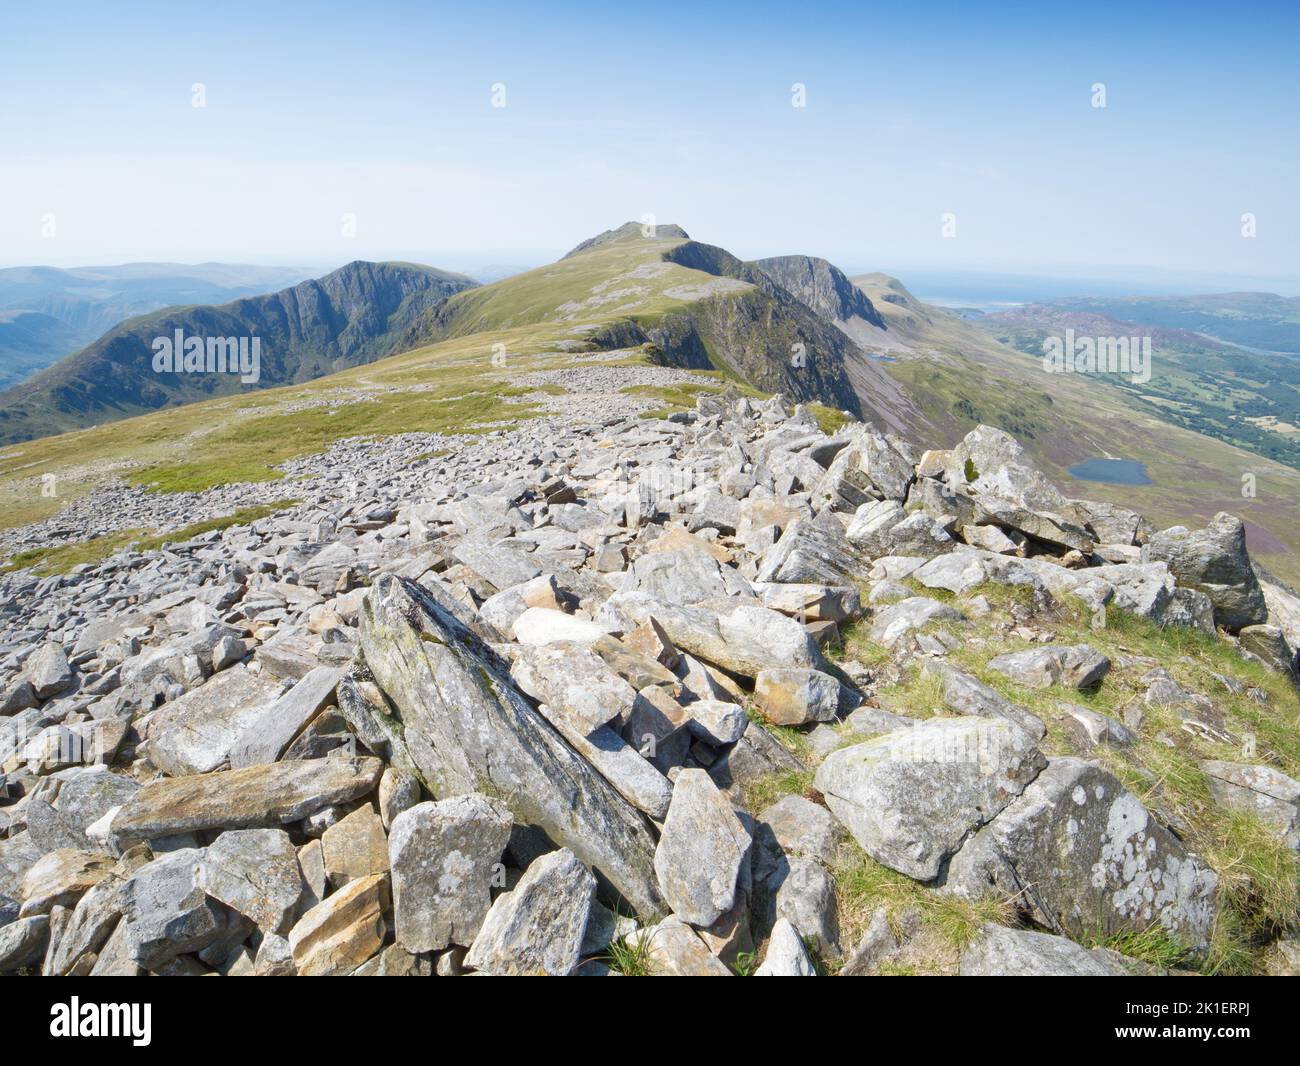 The summit of Cadair Idris, Penygadair, viewed from the neighbouring summit of Mynydd Moel Stock Photo